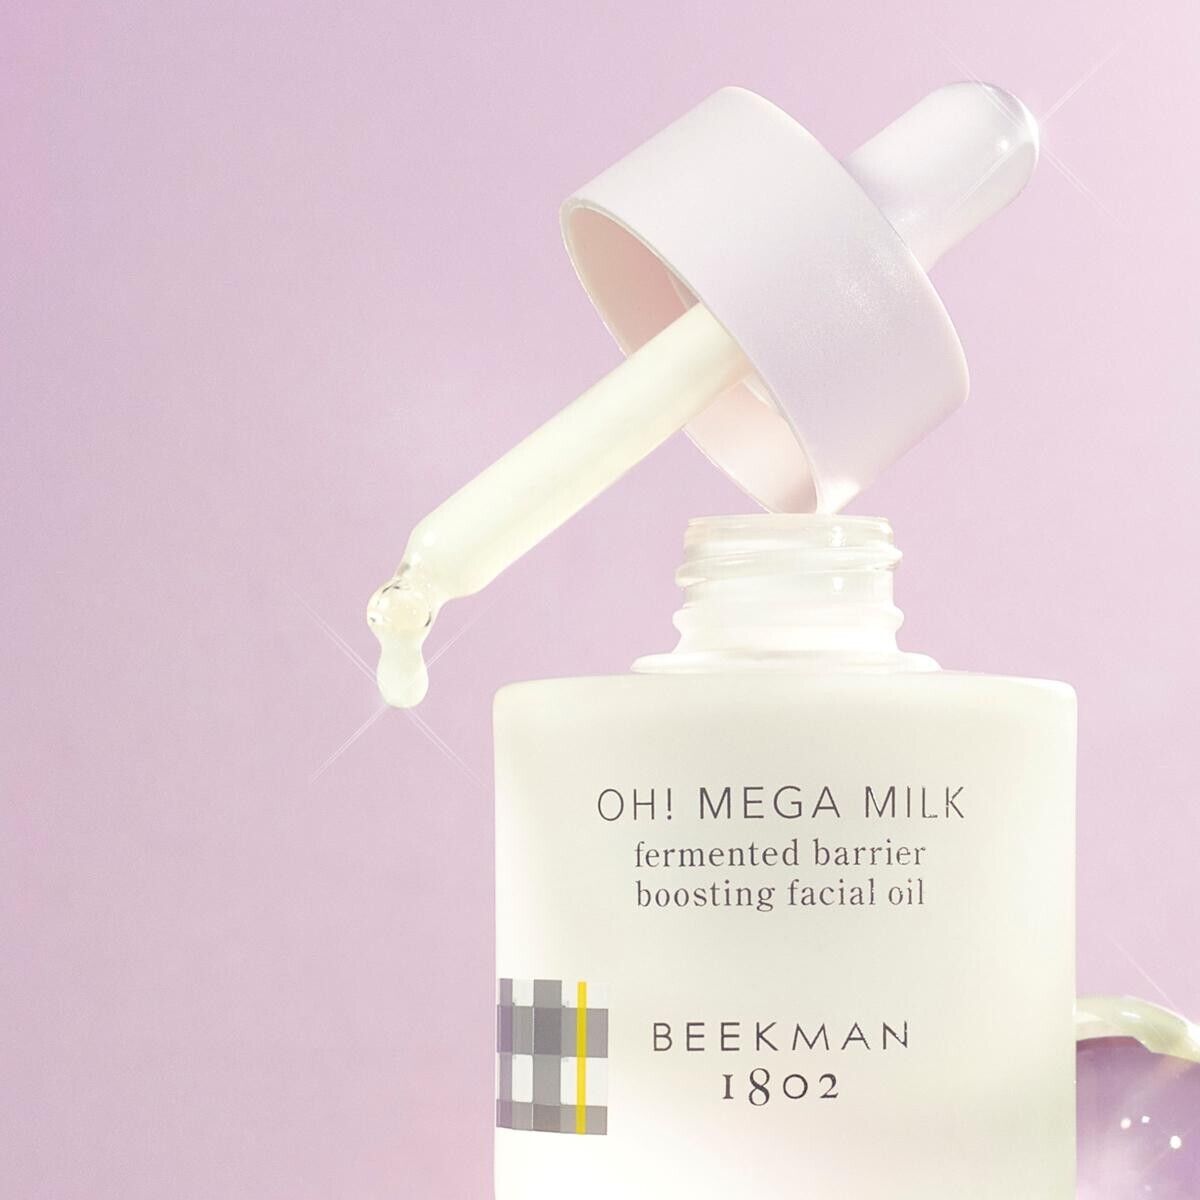 Beekman 1802 OH! Mega Milk Fermented barrier boosting facial oil 1.0 fl oz. New